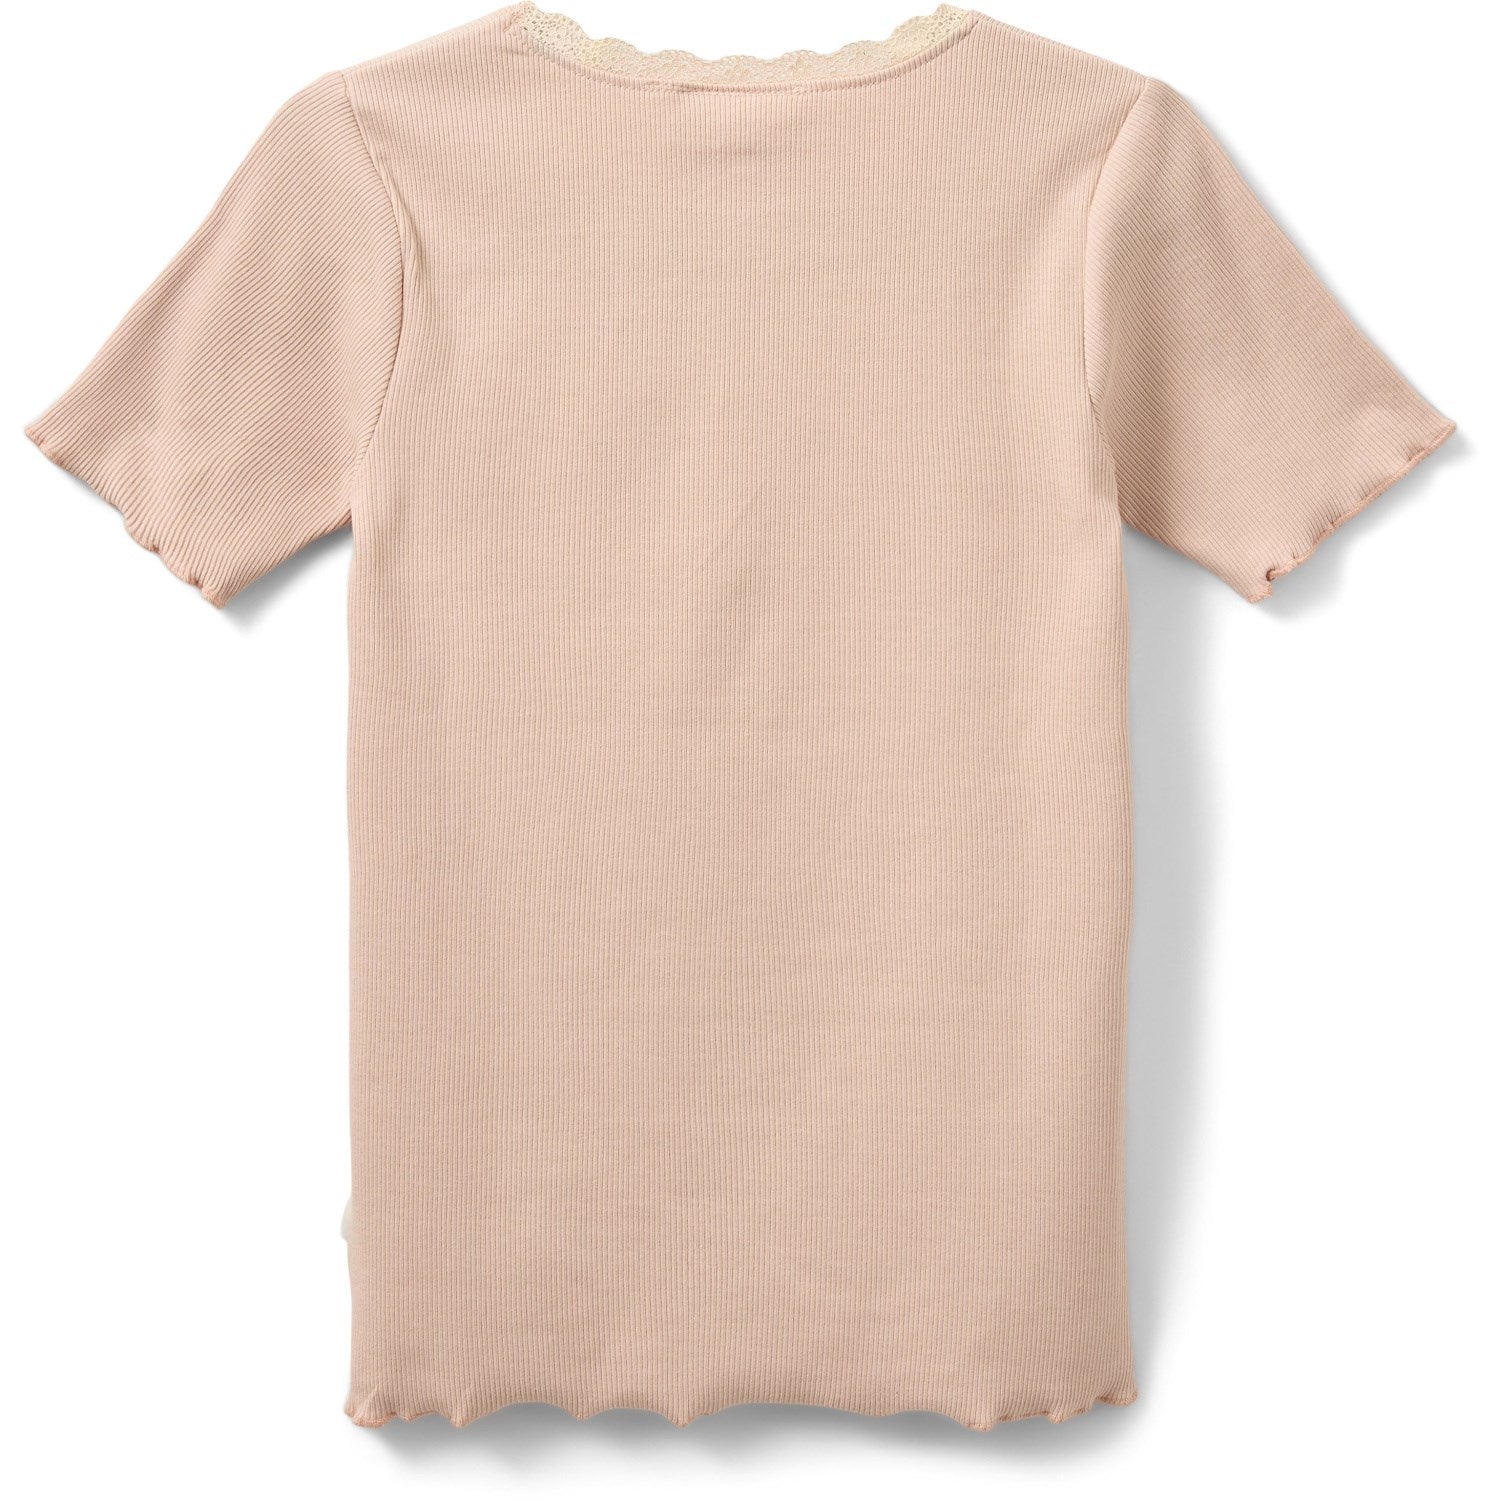 Sofie Schnoor Light Rose T-shirt 2